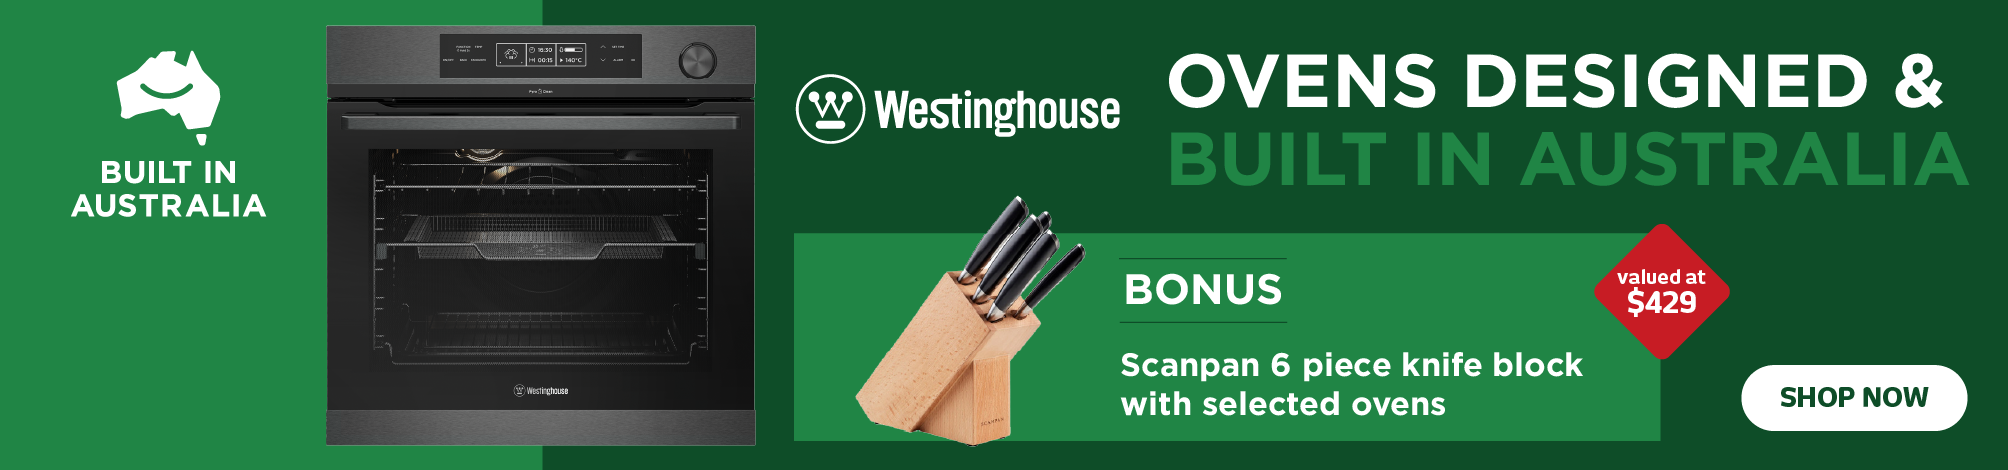 Westinghouse Ovens Designed & Built in Australia - Bonus Scanpan 6 Piece Knife Block Set